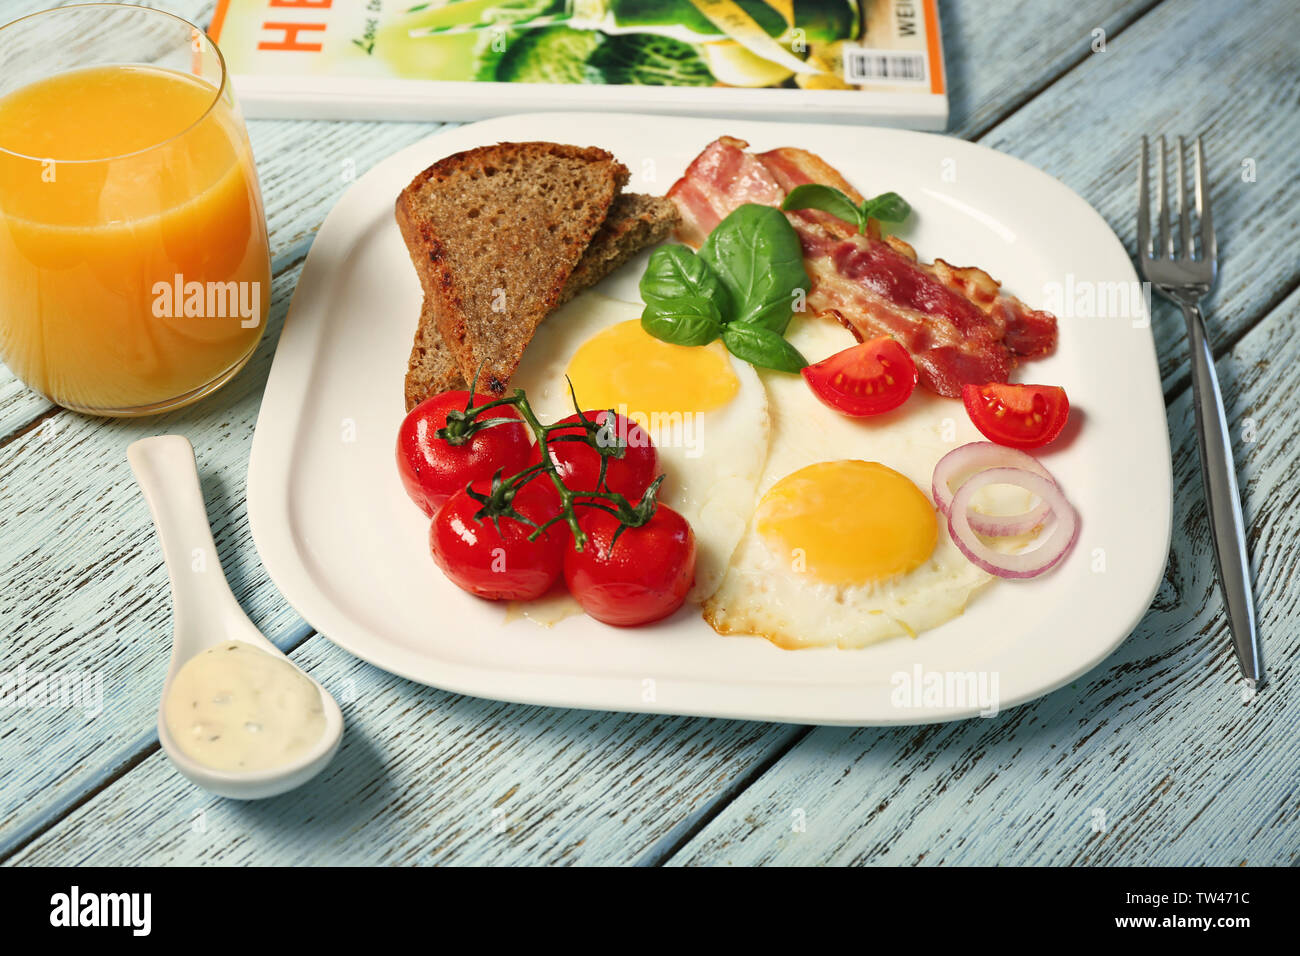 https://c8.alamy.com/comp/TW471C/delicious-breakfast-with-over-easy-eggs-on-kitchen-table-TW471C.jpg